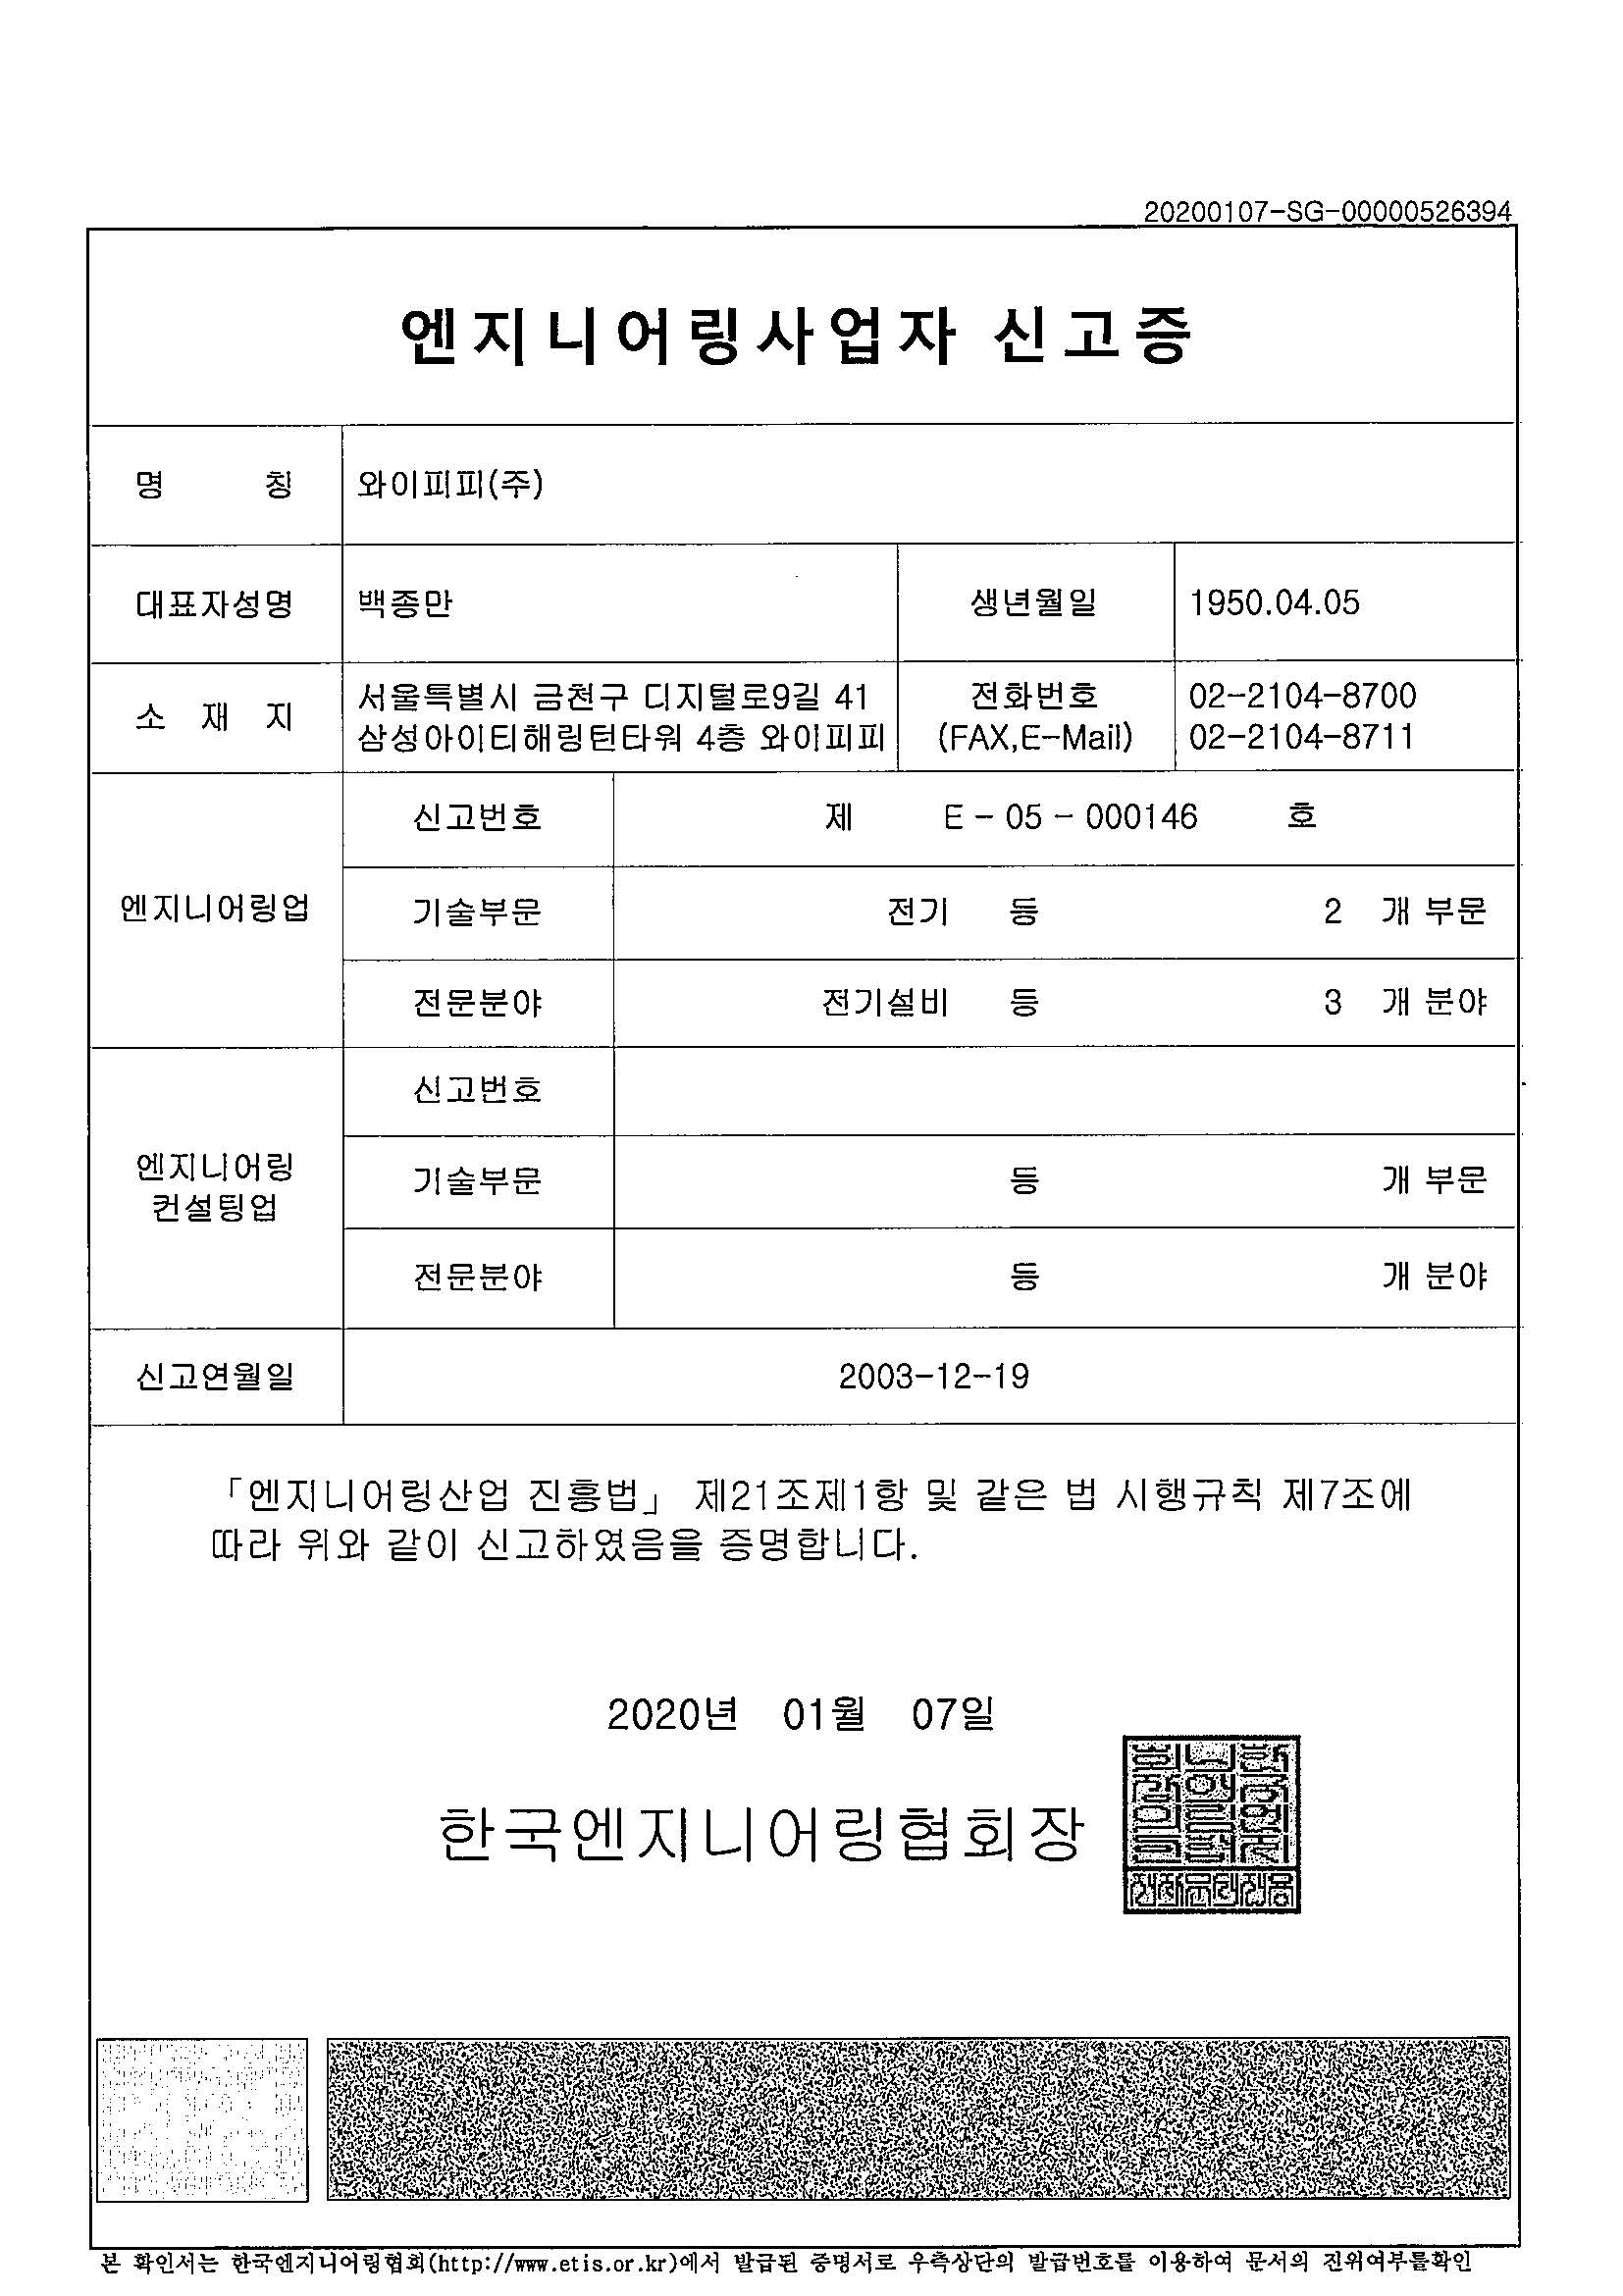 Engineering business registration (Korea Engineering & Consulting Association).jpg